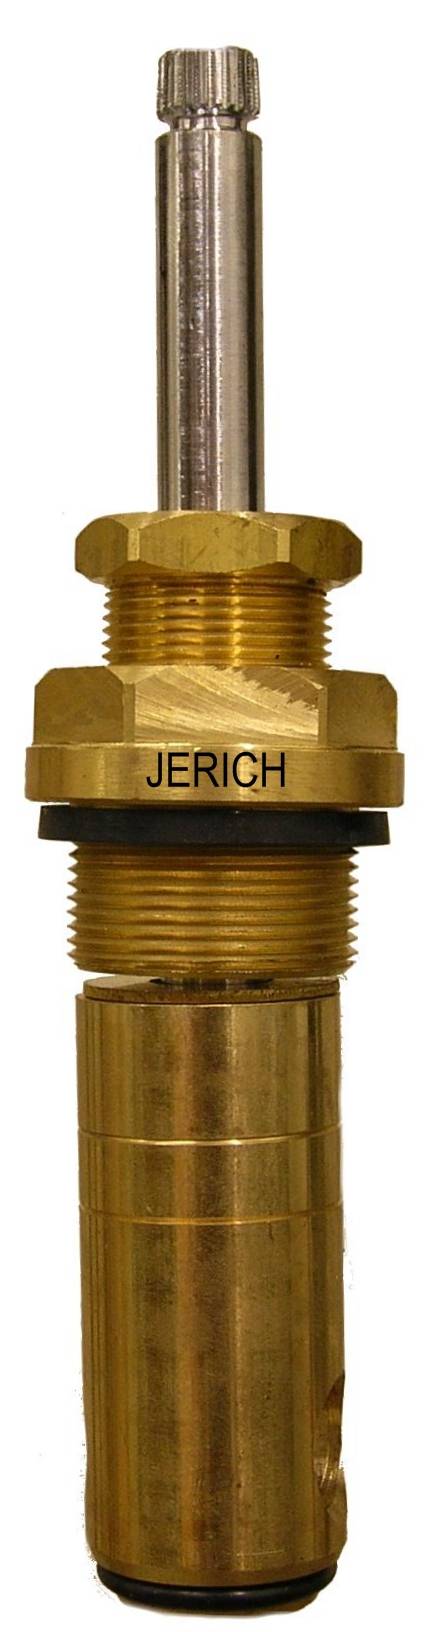 Jerich | American Standard | 59031 |stem unit